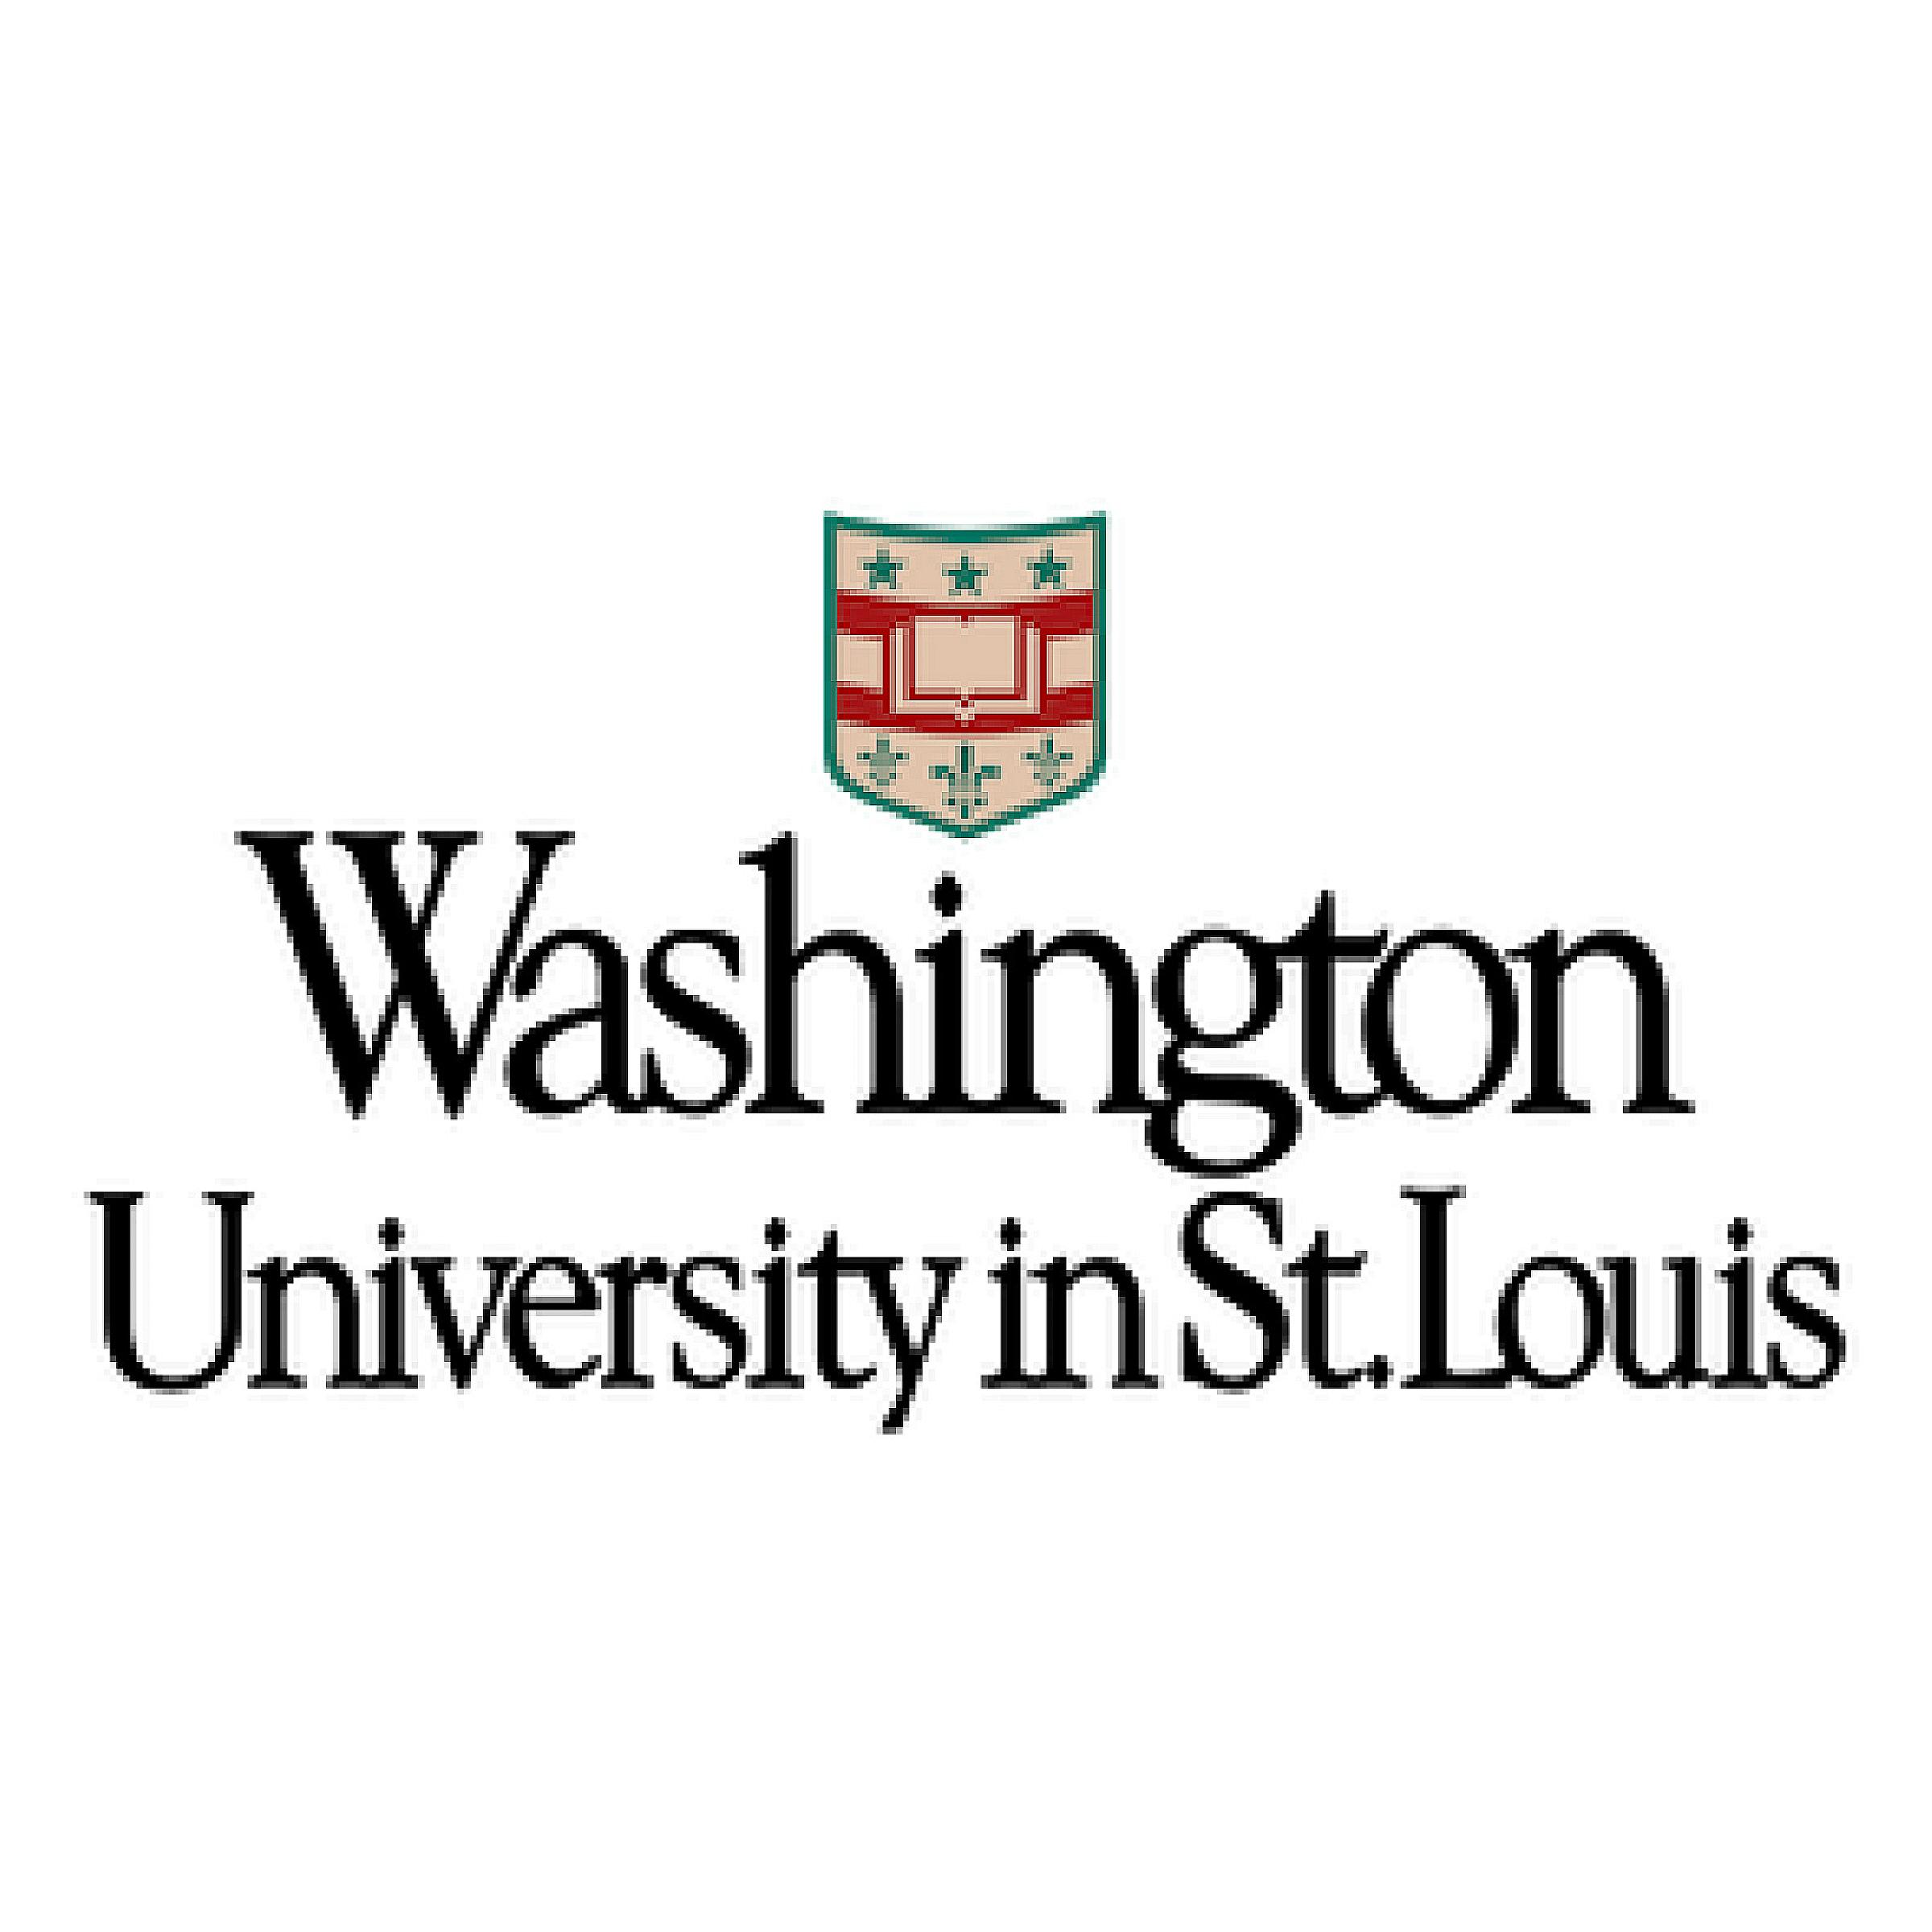 Washington University School of Medicine logo